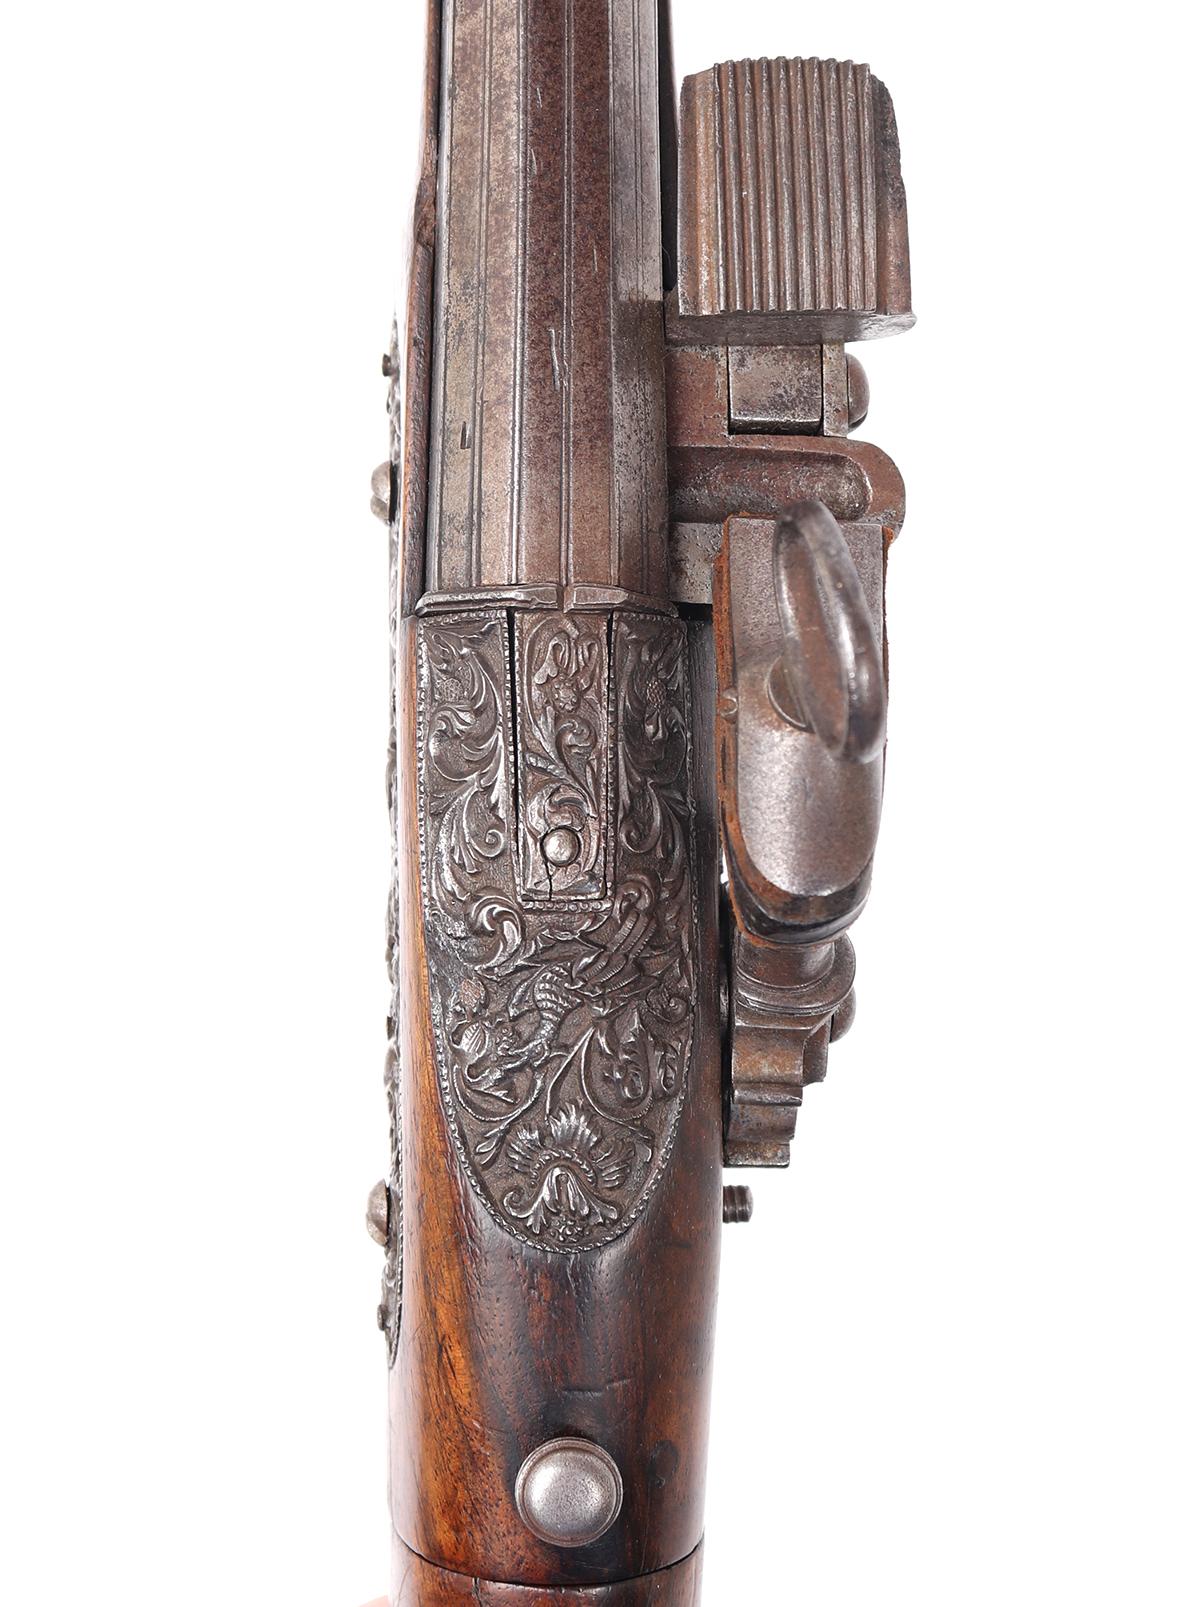 Spanish Chiseled Folding-Stock Flintlock Carbine, 18th C.